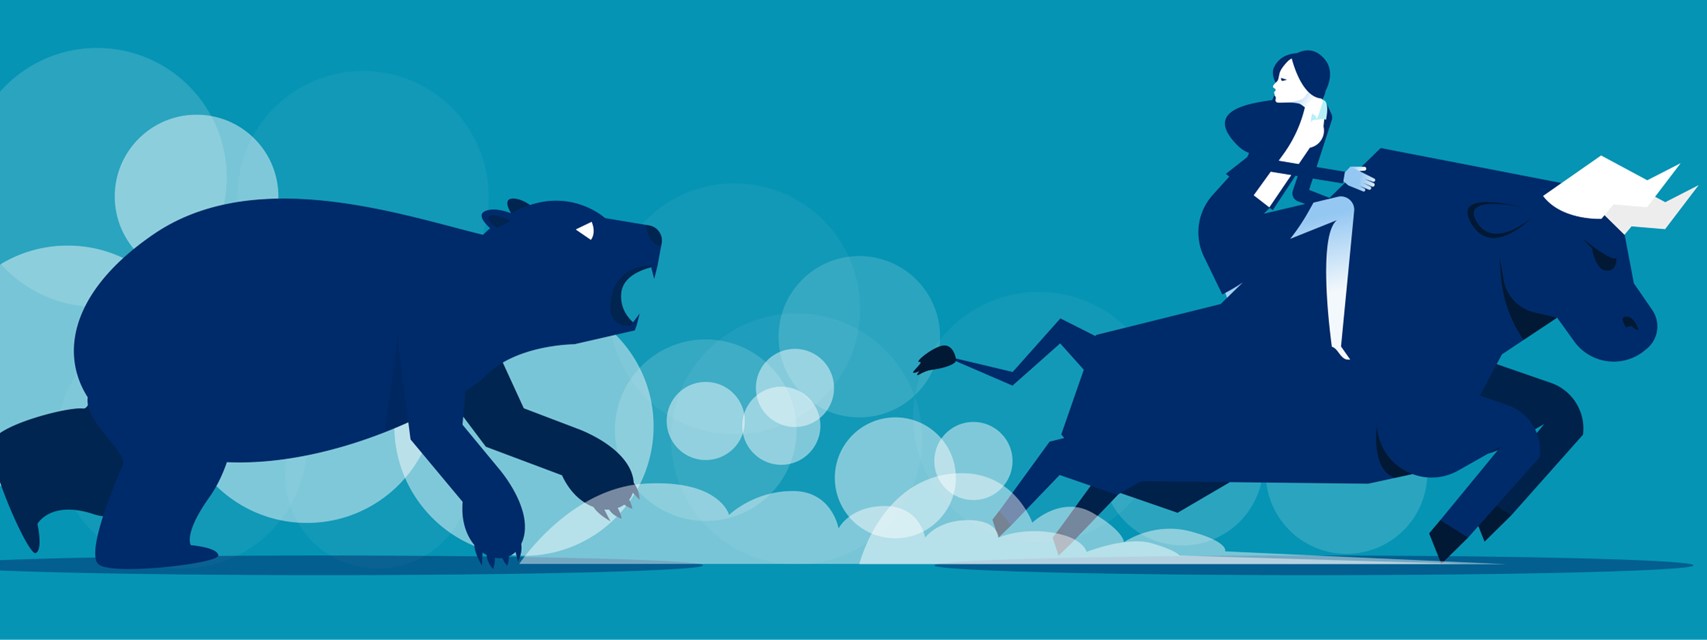 Cartoon of bear chasing a bull with executive riding bull